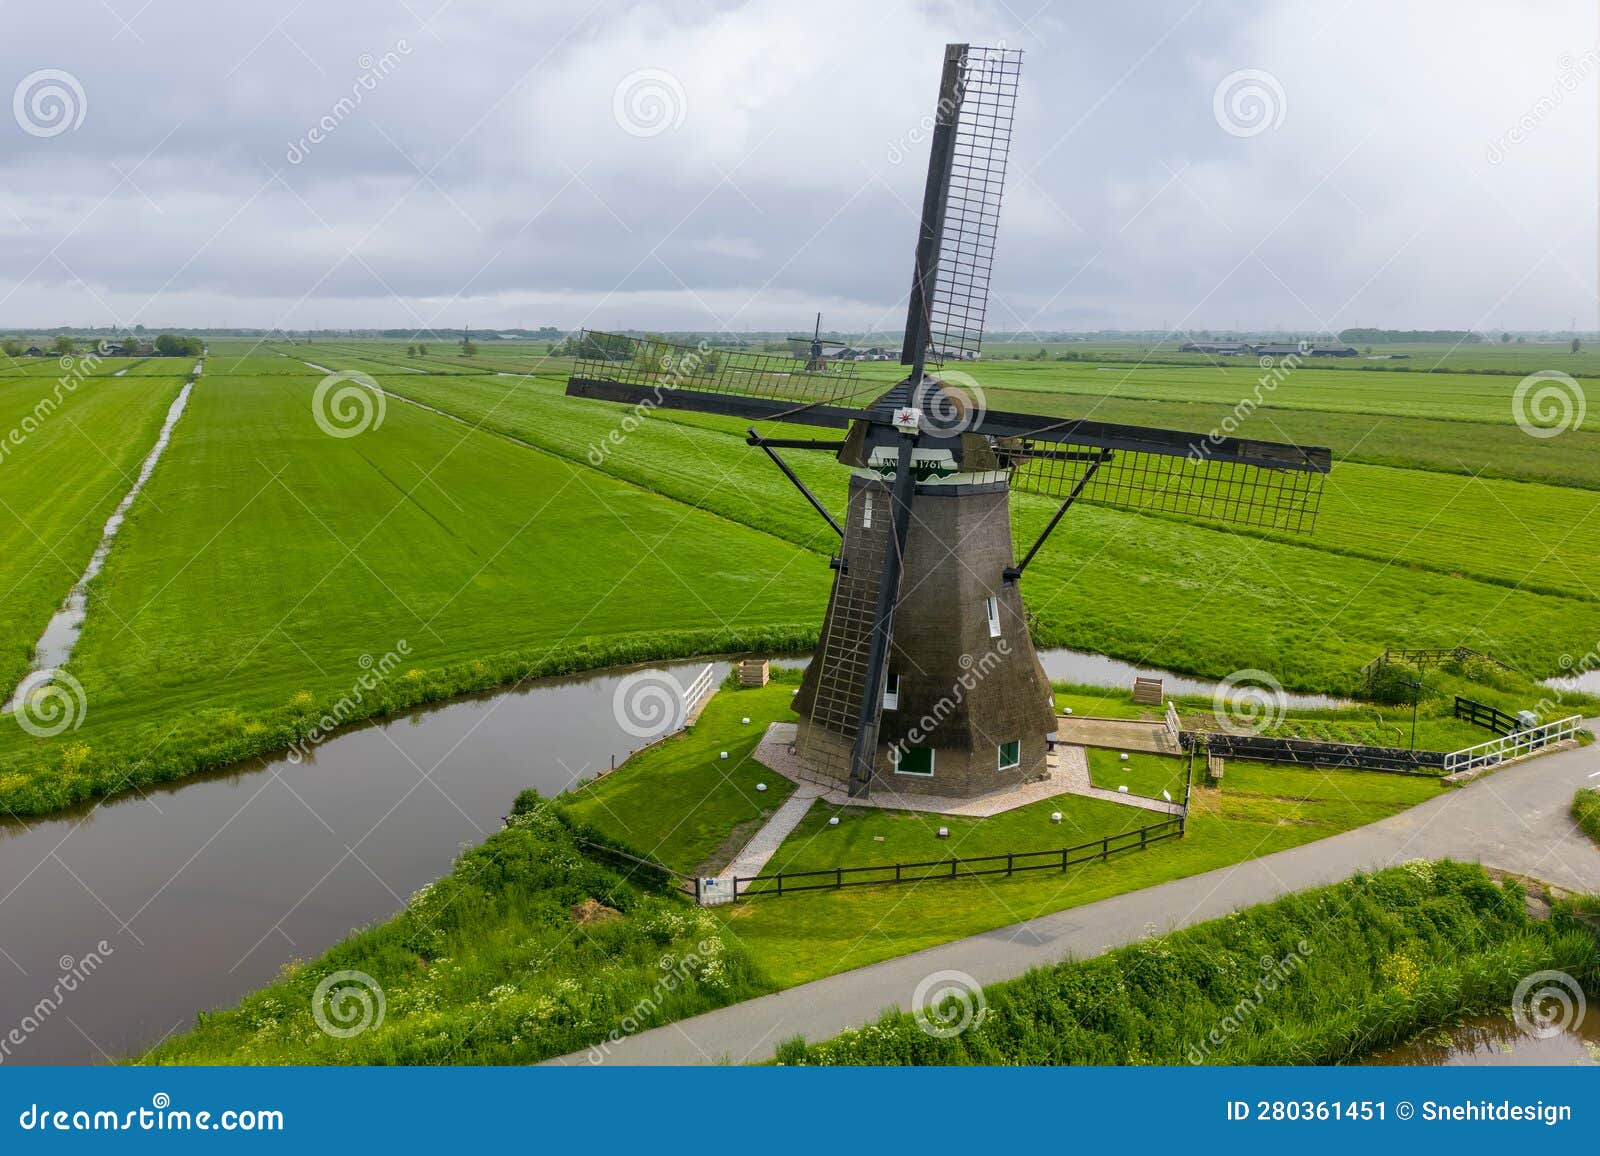 achtkante molen, is a historic wind mill located near streefkerk in the netherlands